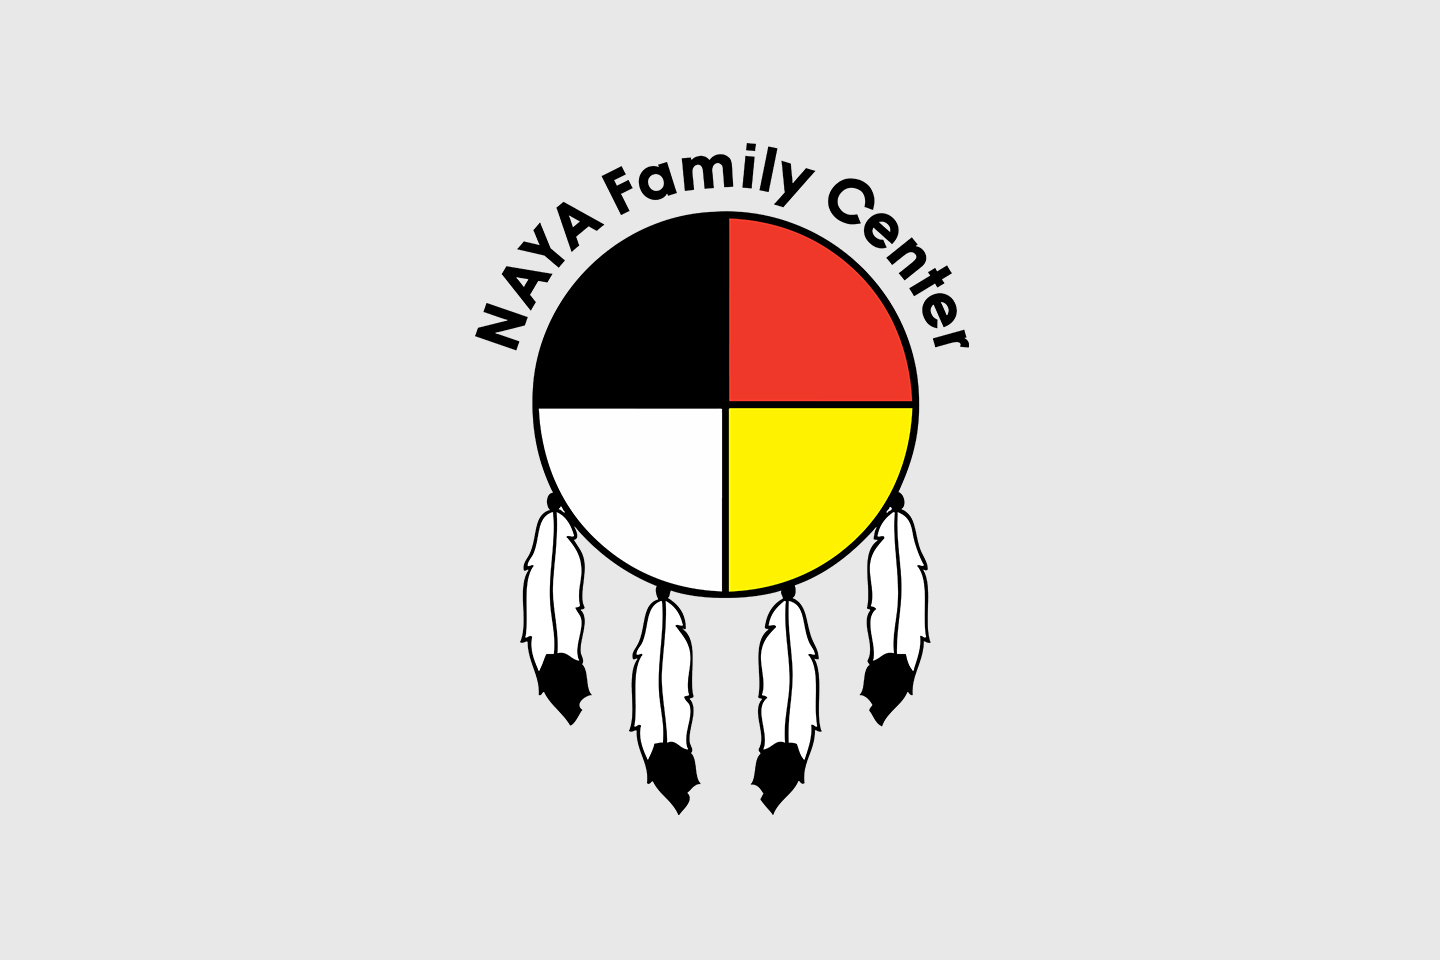 Native American Youth Family Center (NAYA) logo